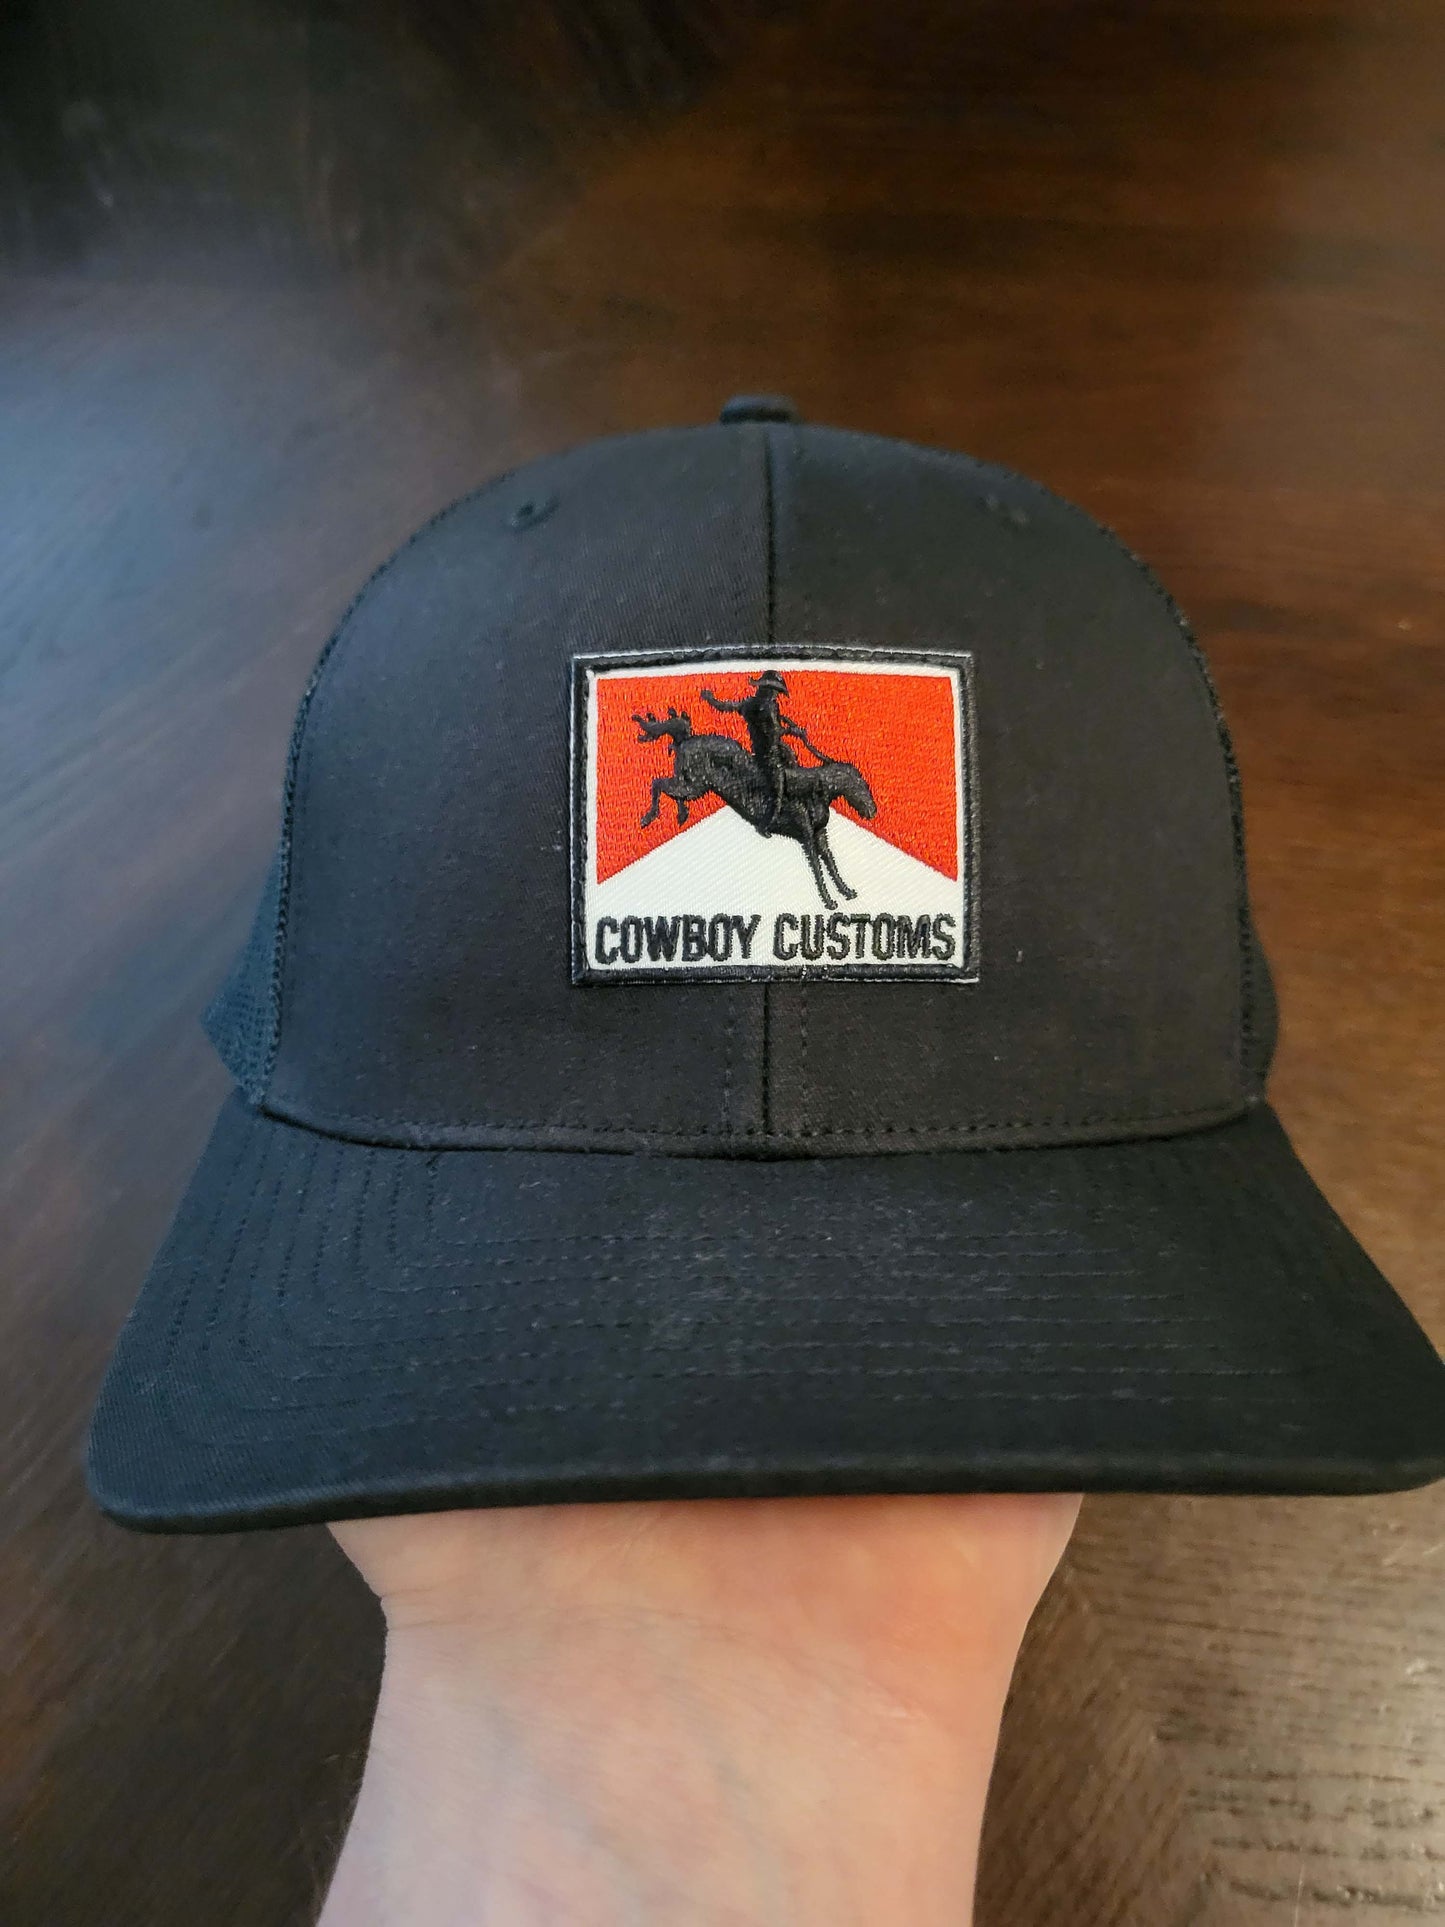 Hurricane Deck® - Black Trucker Hat